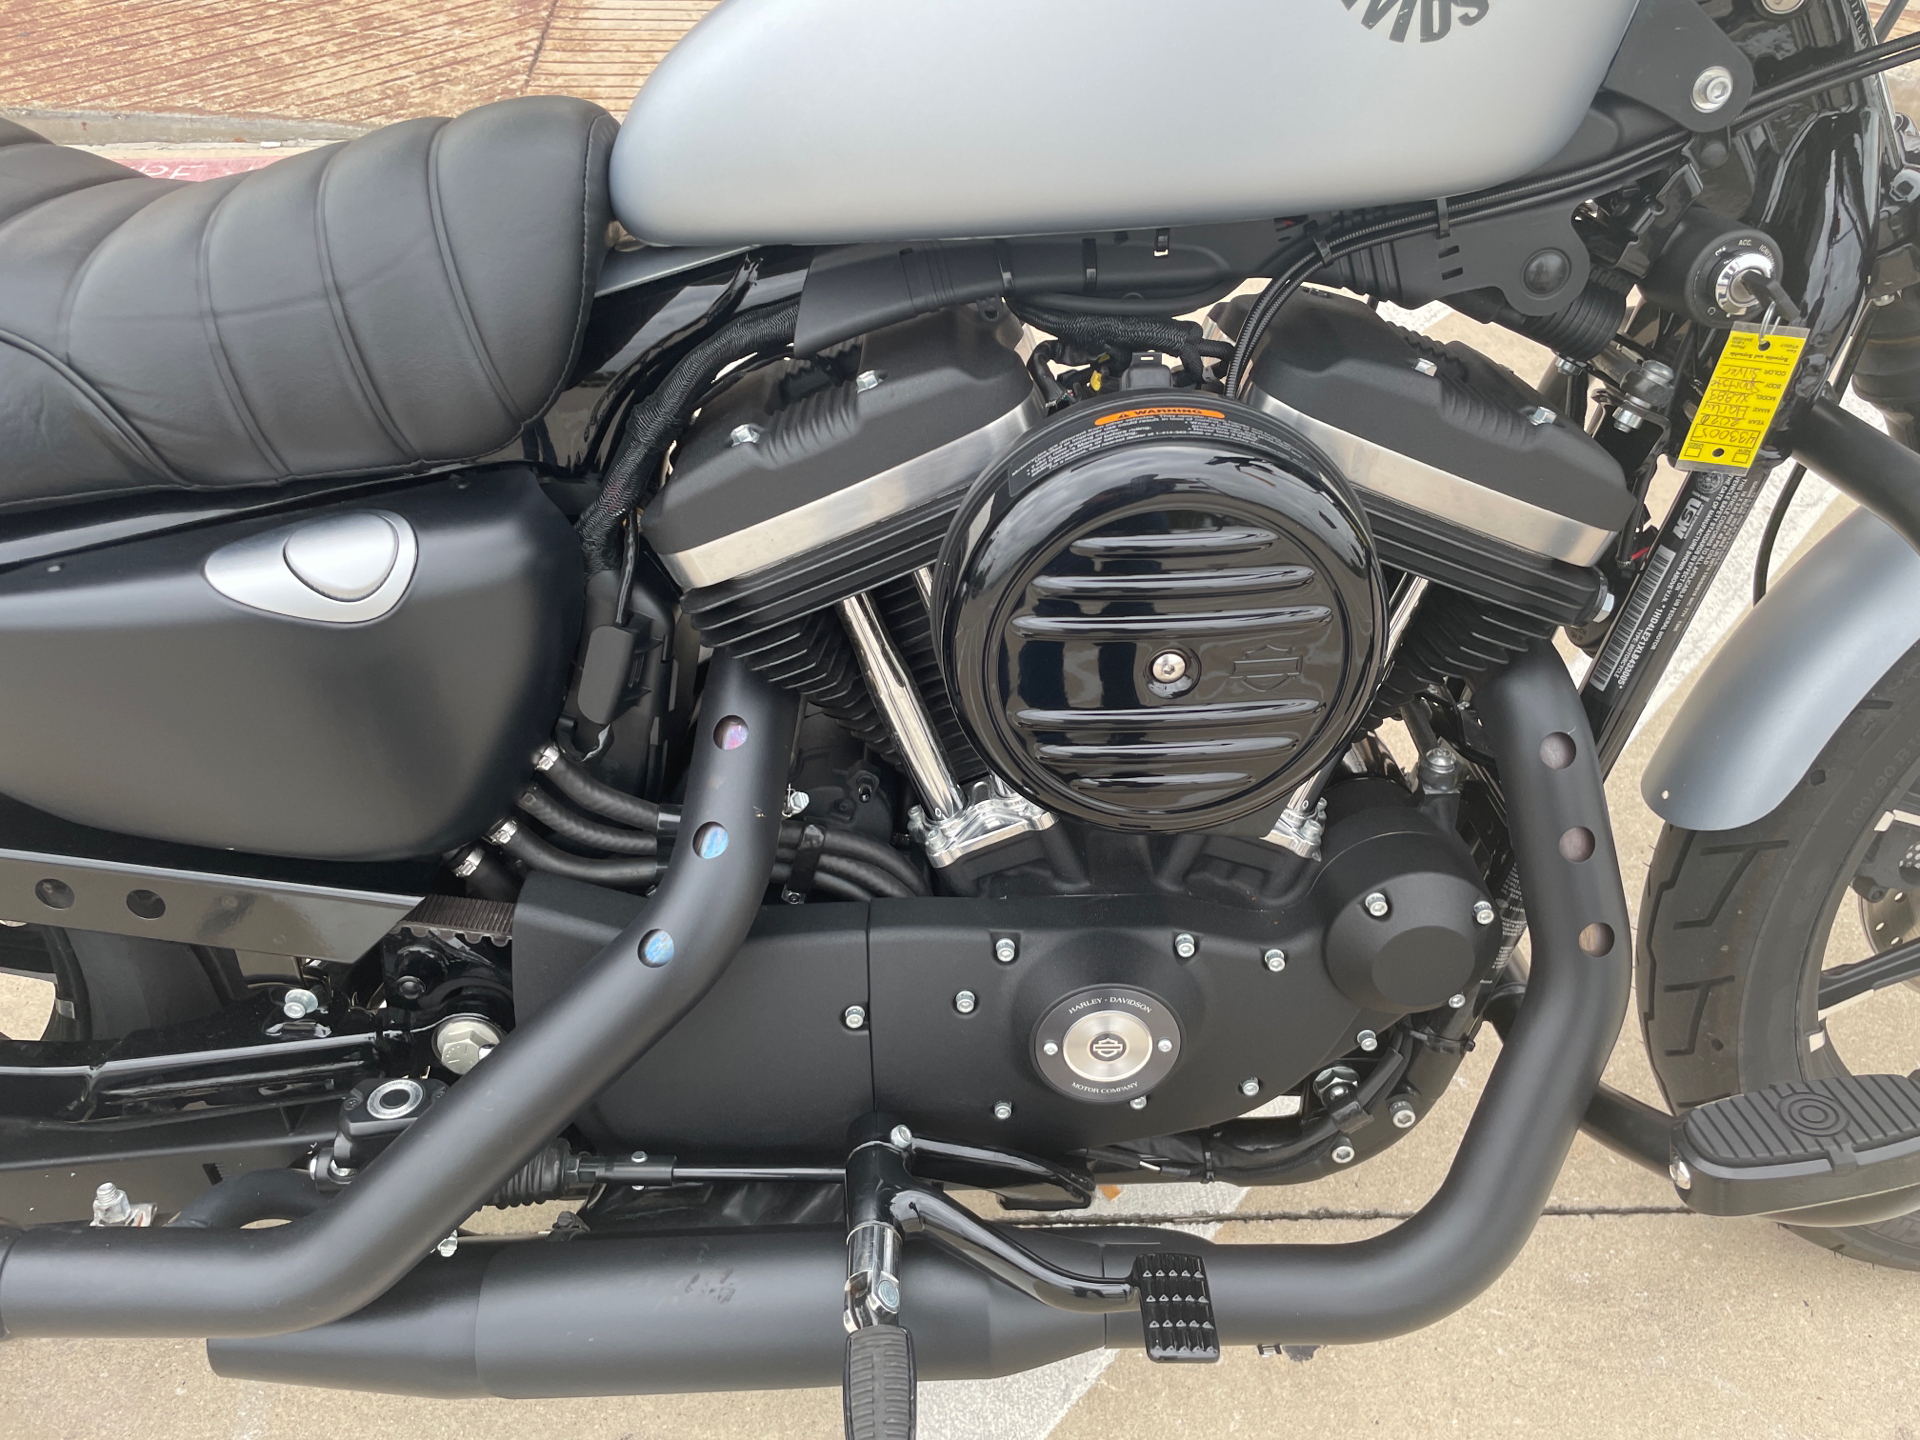 2020 Harley-Davidson Iron 883™ in San Antonio, Texas - Photo 9